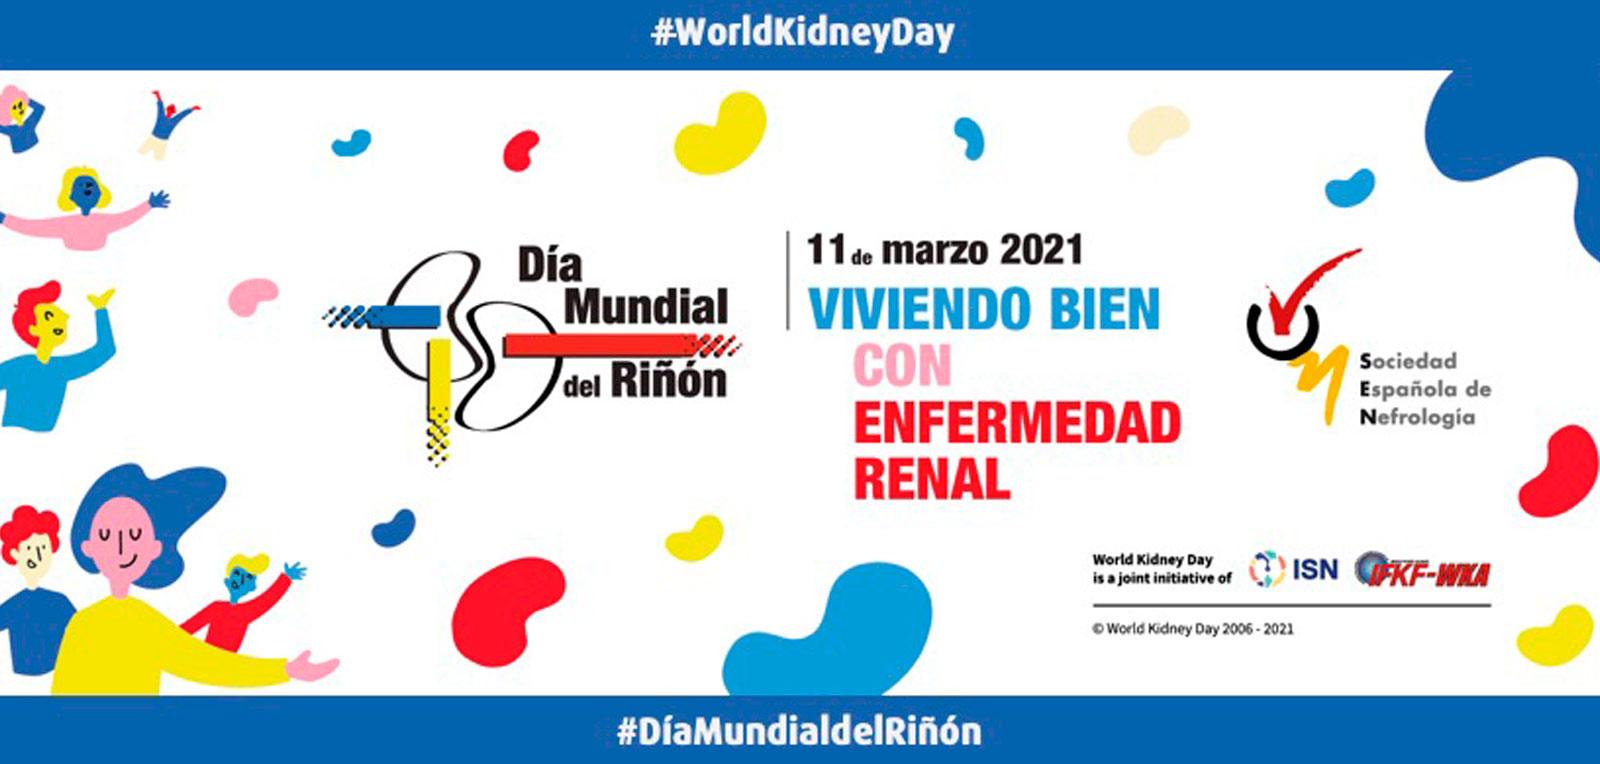 World Kidney Day, increased awareness of kidney disease